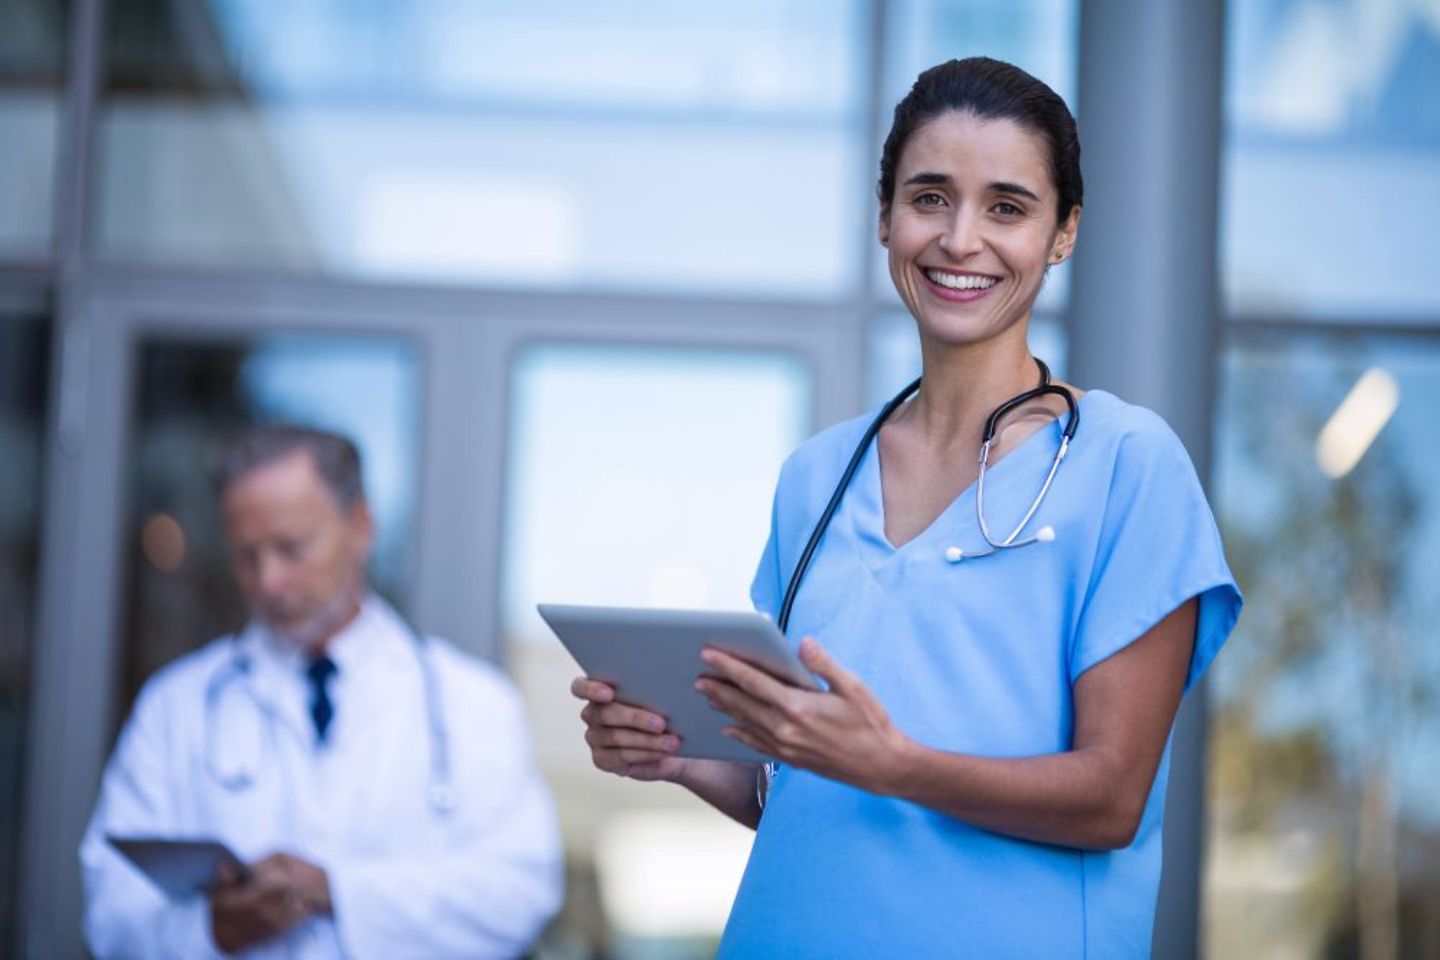 Smiling nurse and doctor holding digital tablet in front of hospital